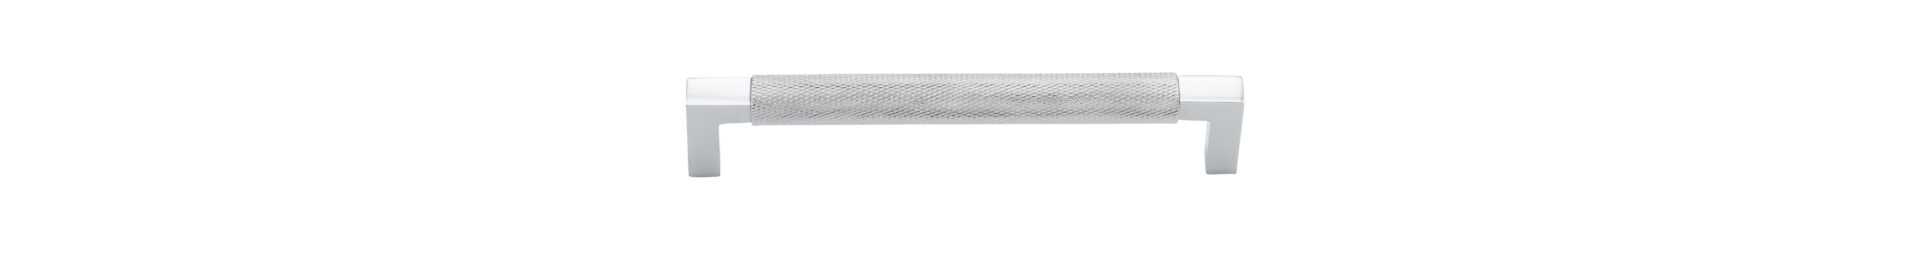 22112 - Brunswick Cabinet Pull - CTC160mm - Polished Chrome